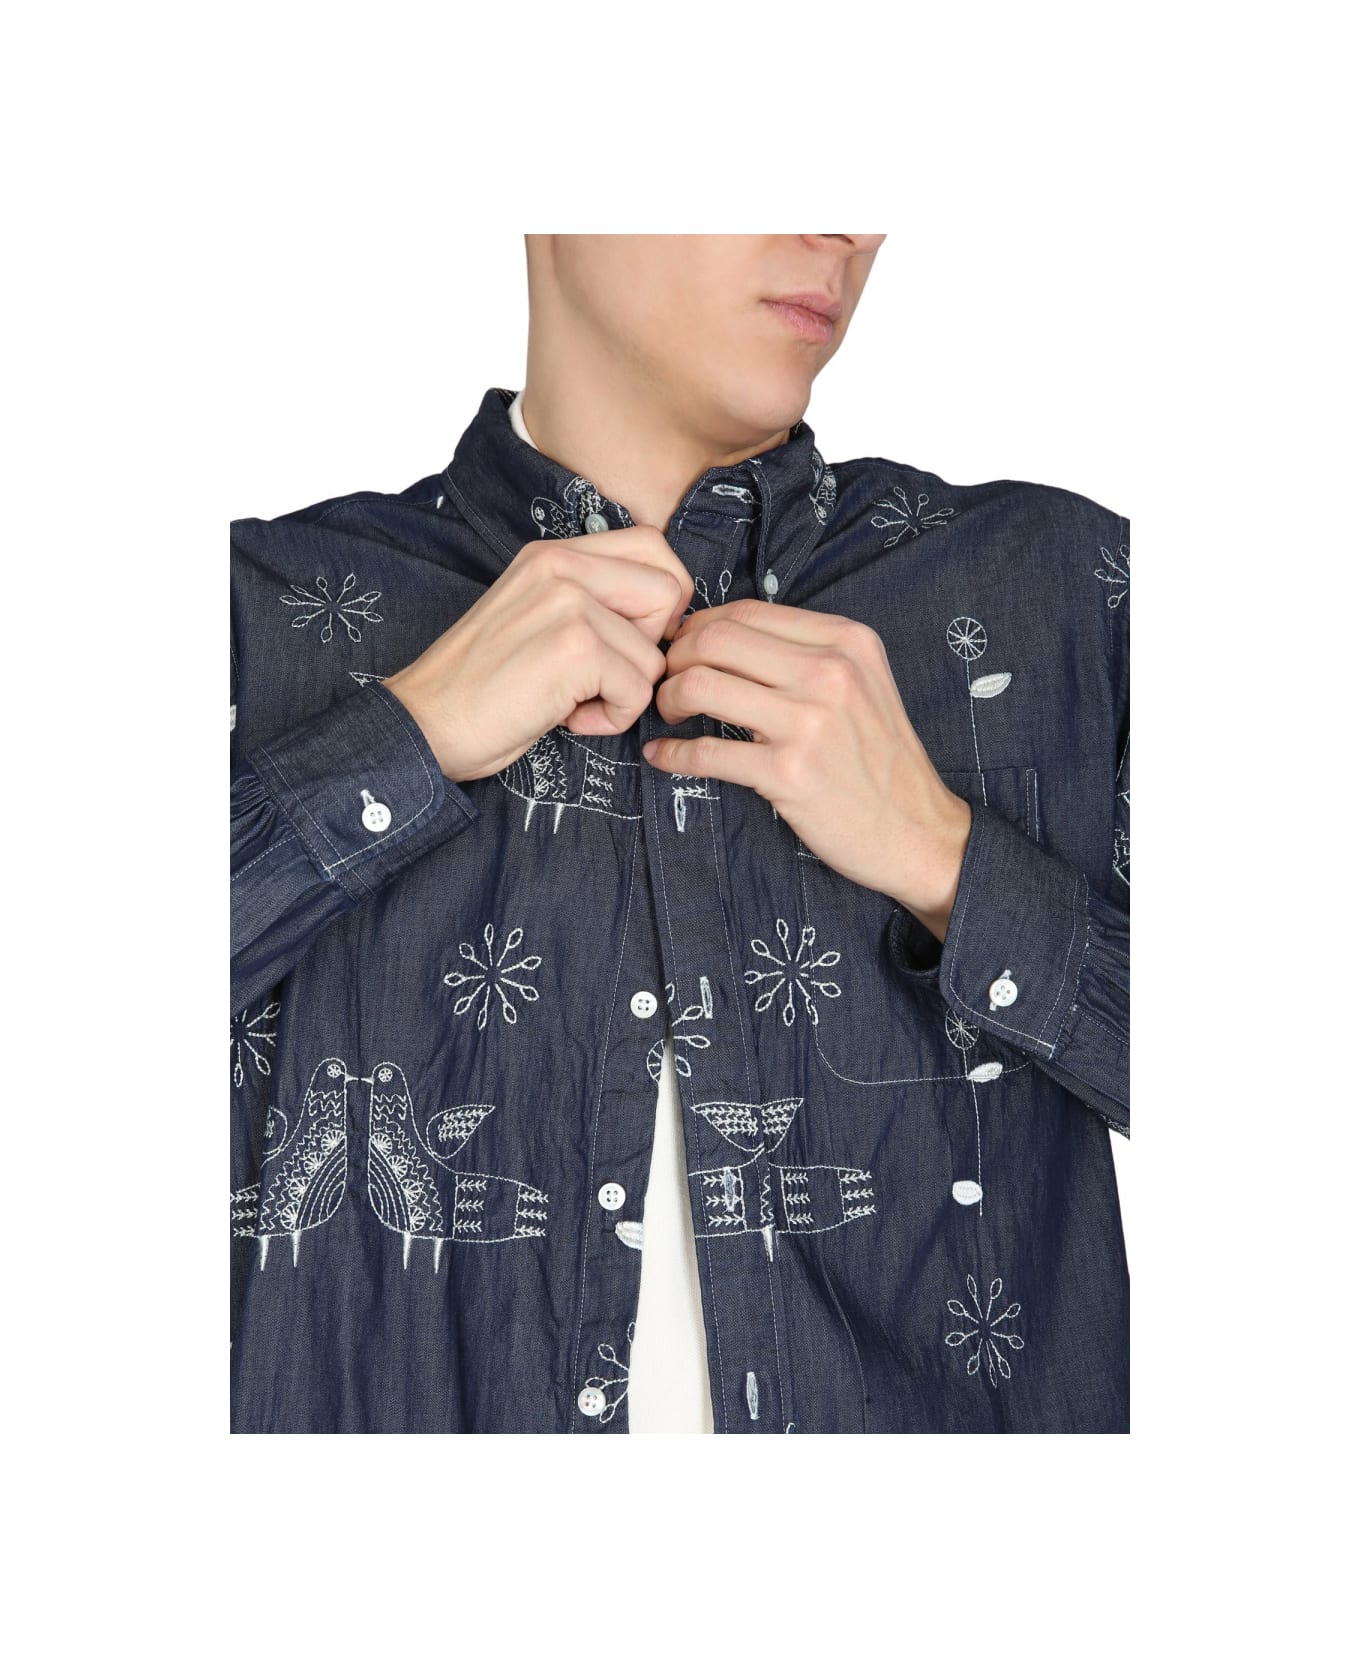 Engineered Garments "bird" Embroidery Shirt - BLUE